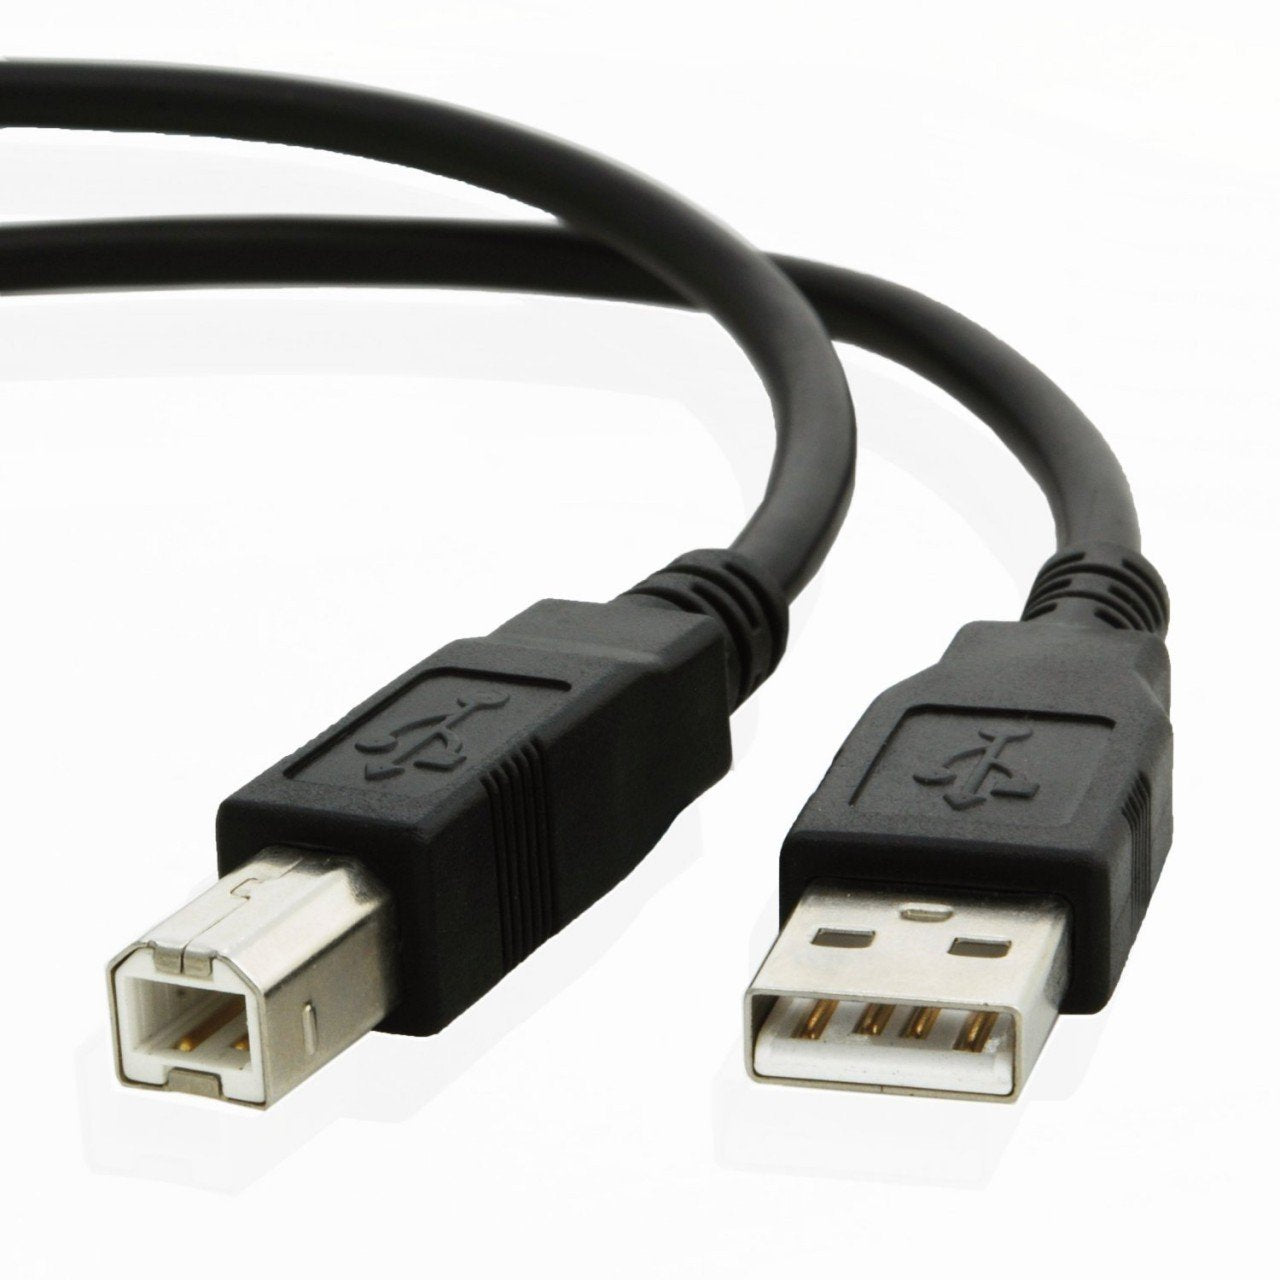 USB cable for Subzero SZC-500